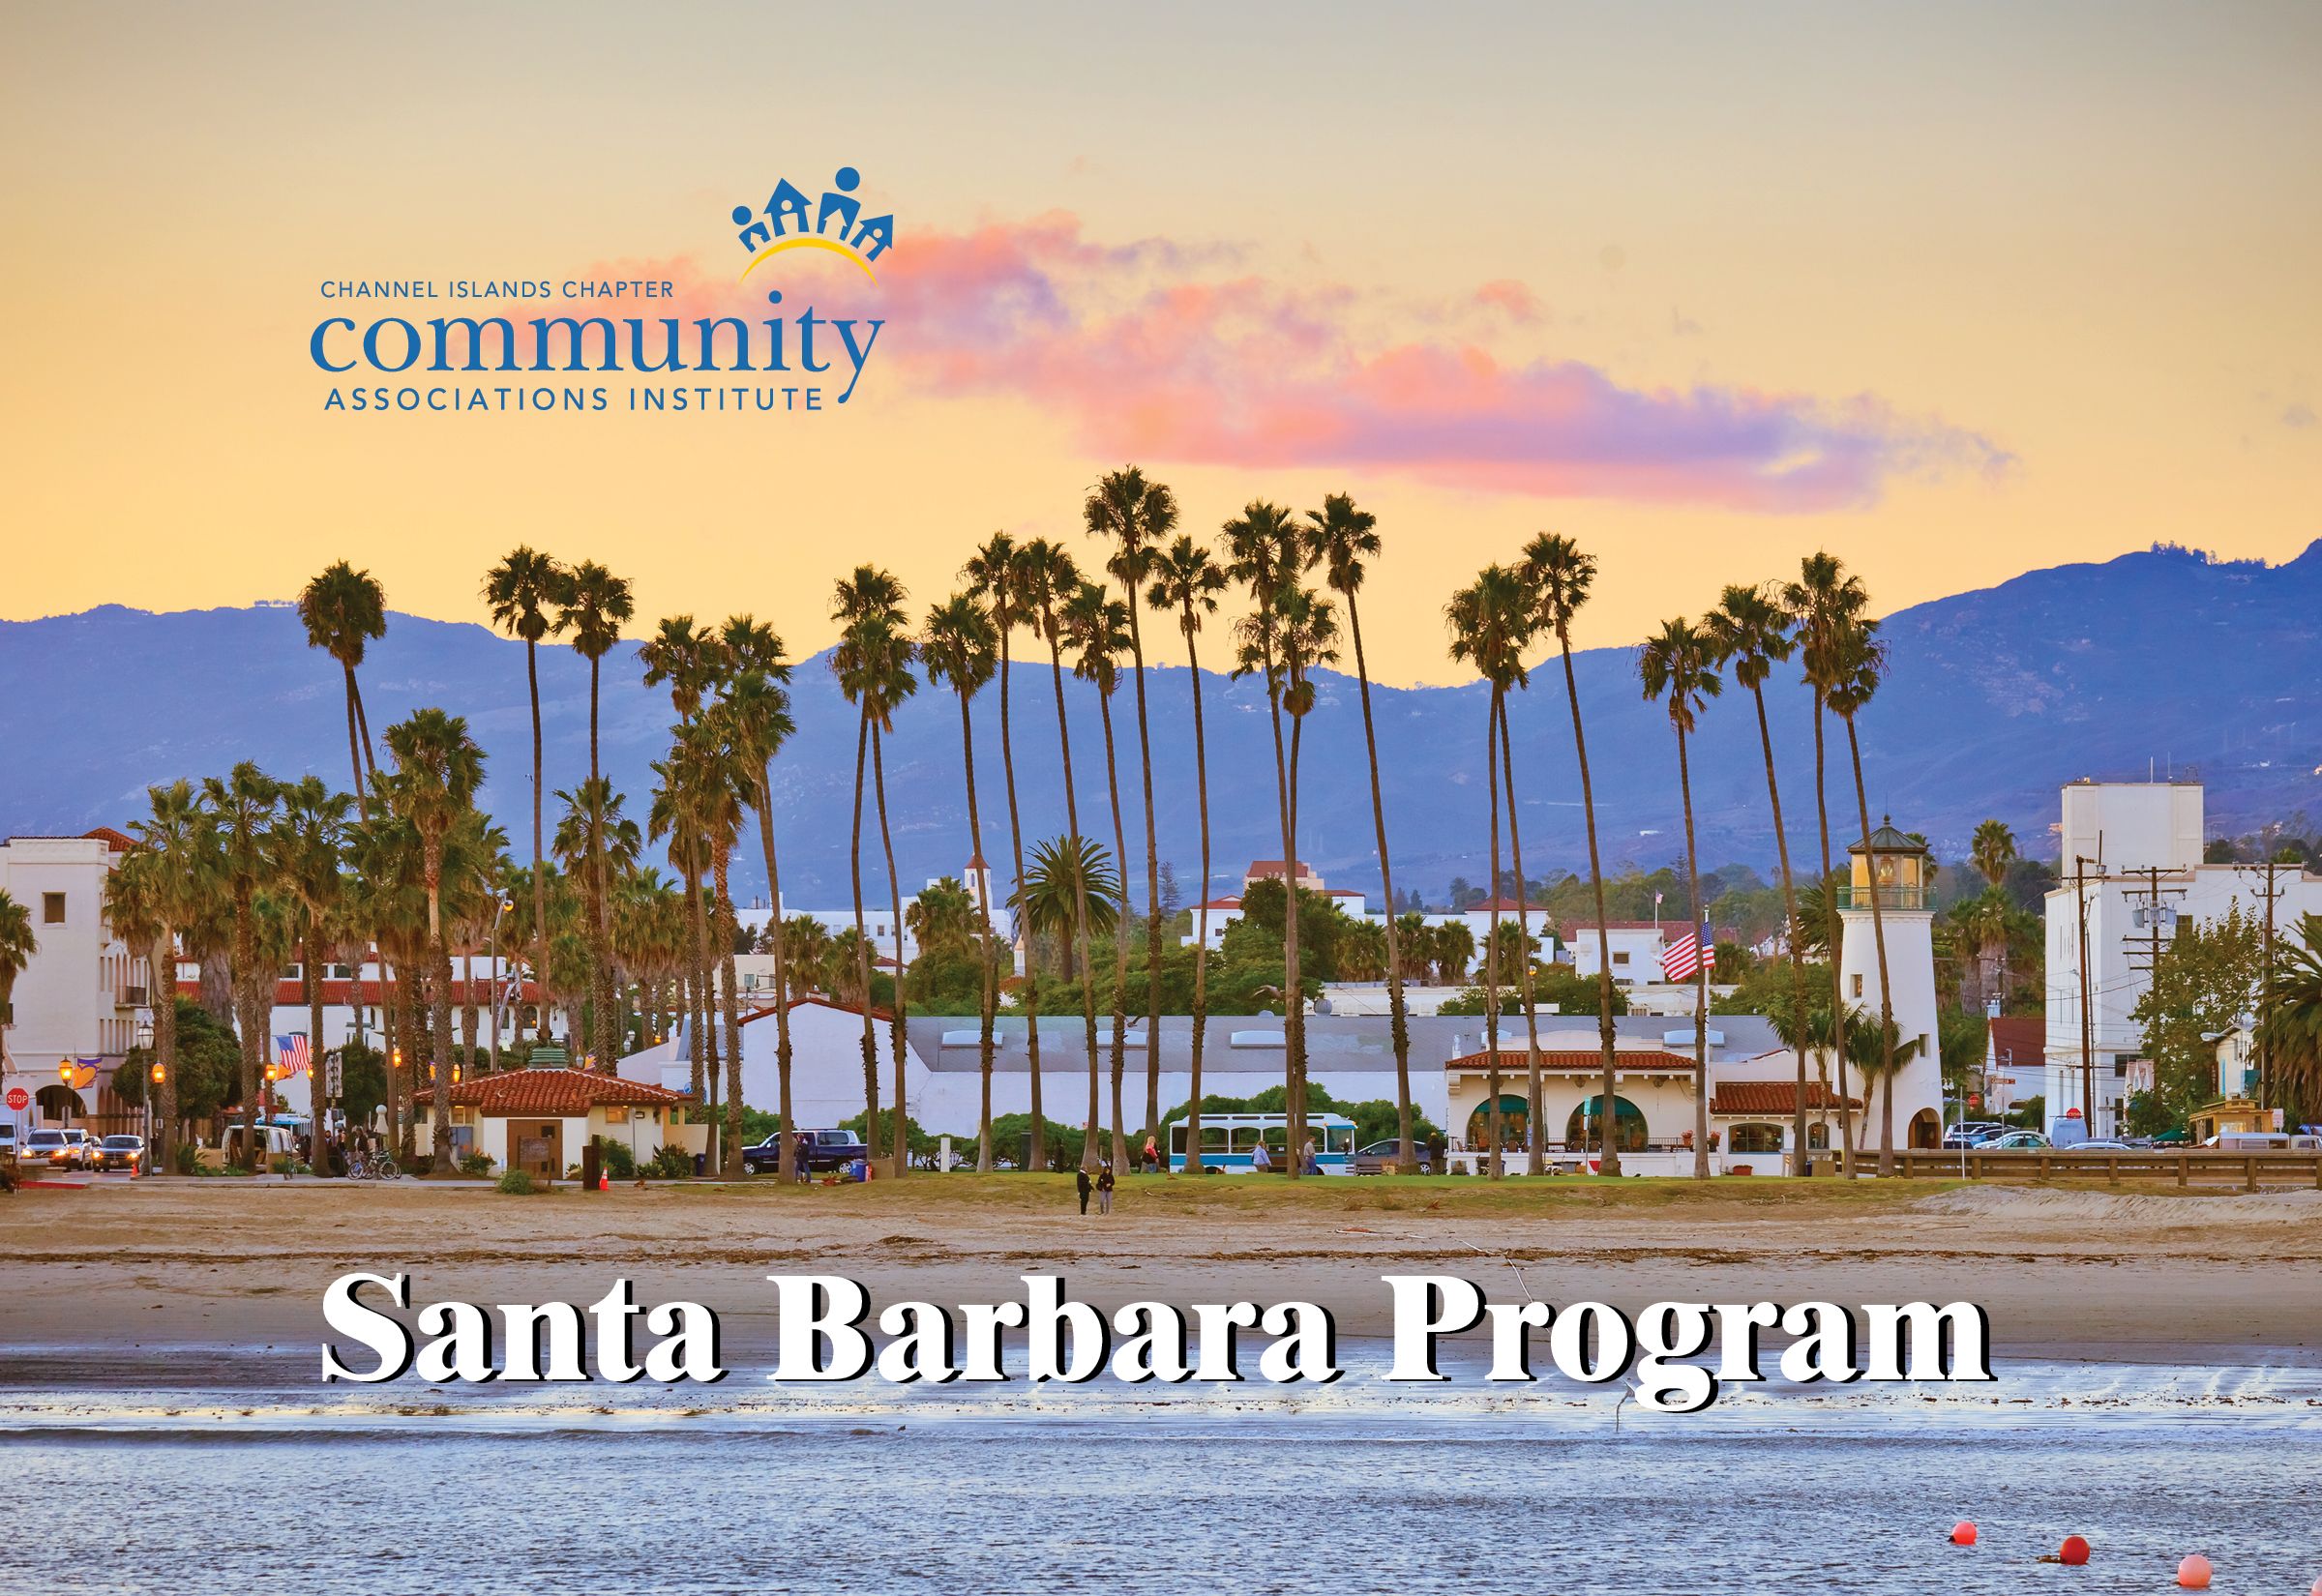 Santa Barbara Program